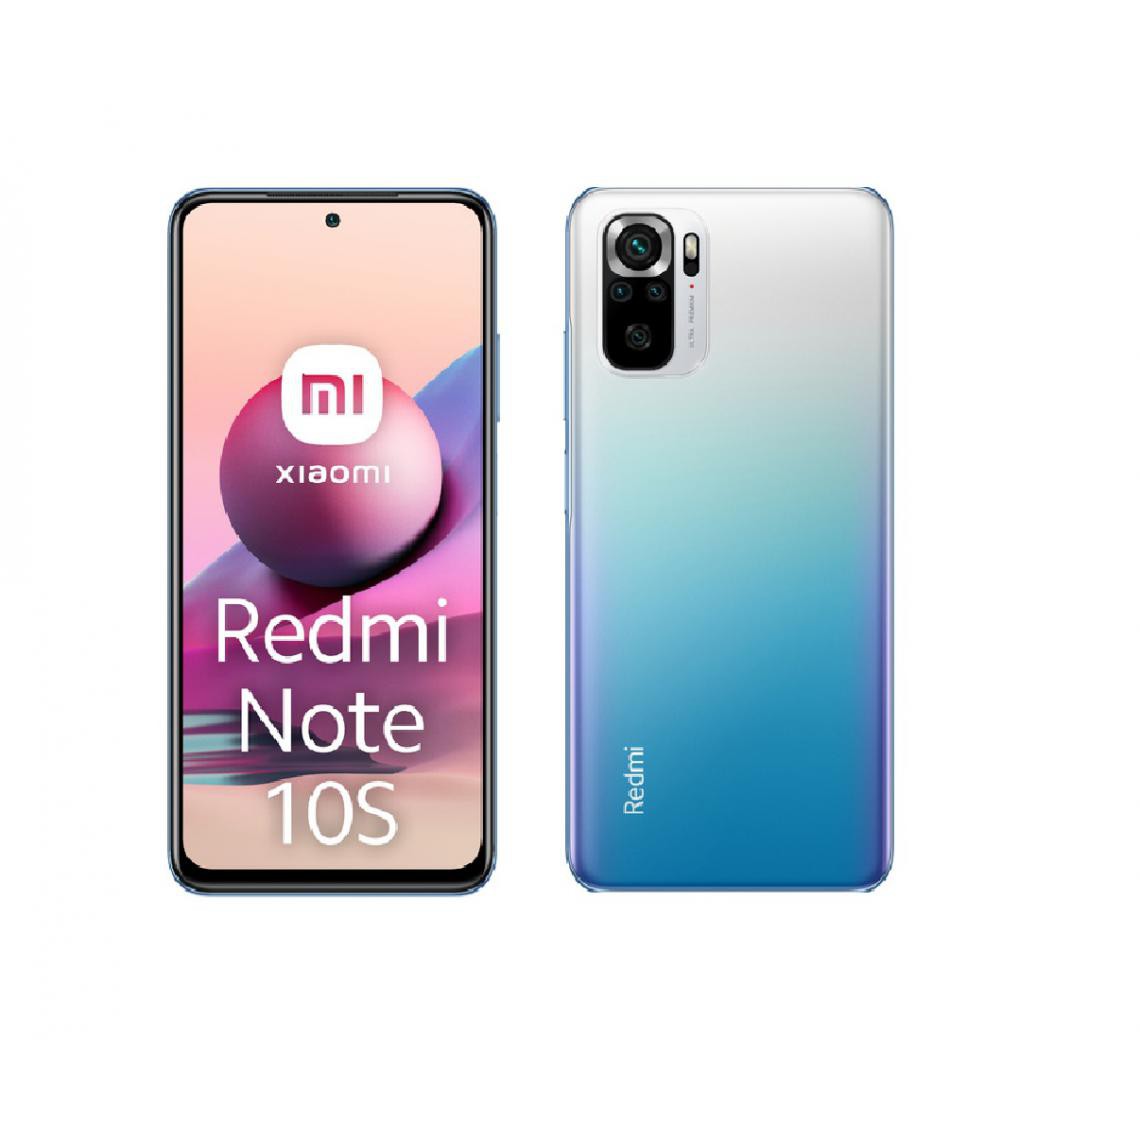 XIAOMI - Redmi Note 10S - 64 Go - Bleu - Smartphone Android